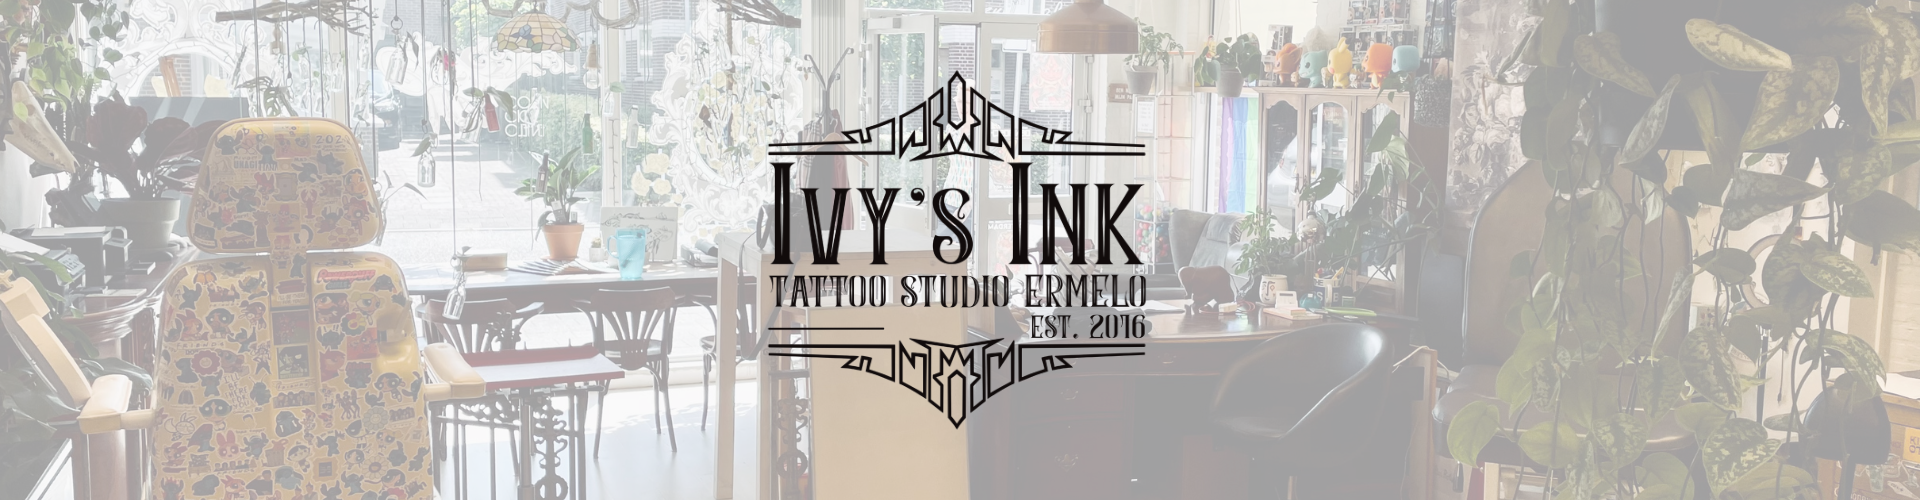 Tattooshop Ermelo Ivy's Ink